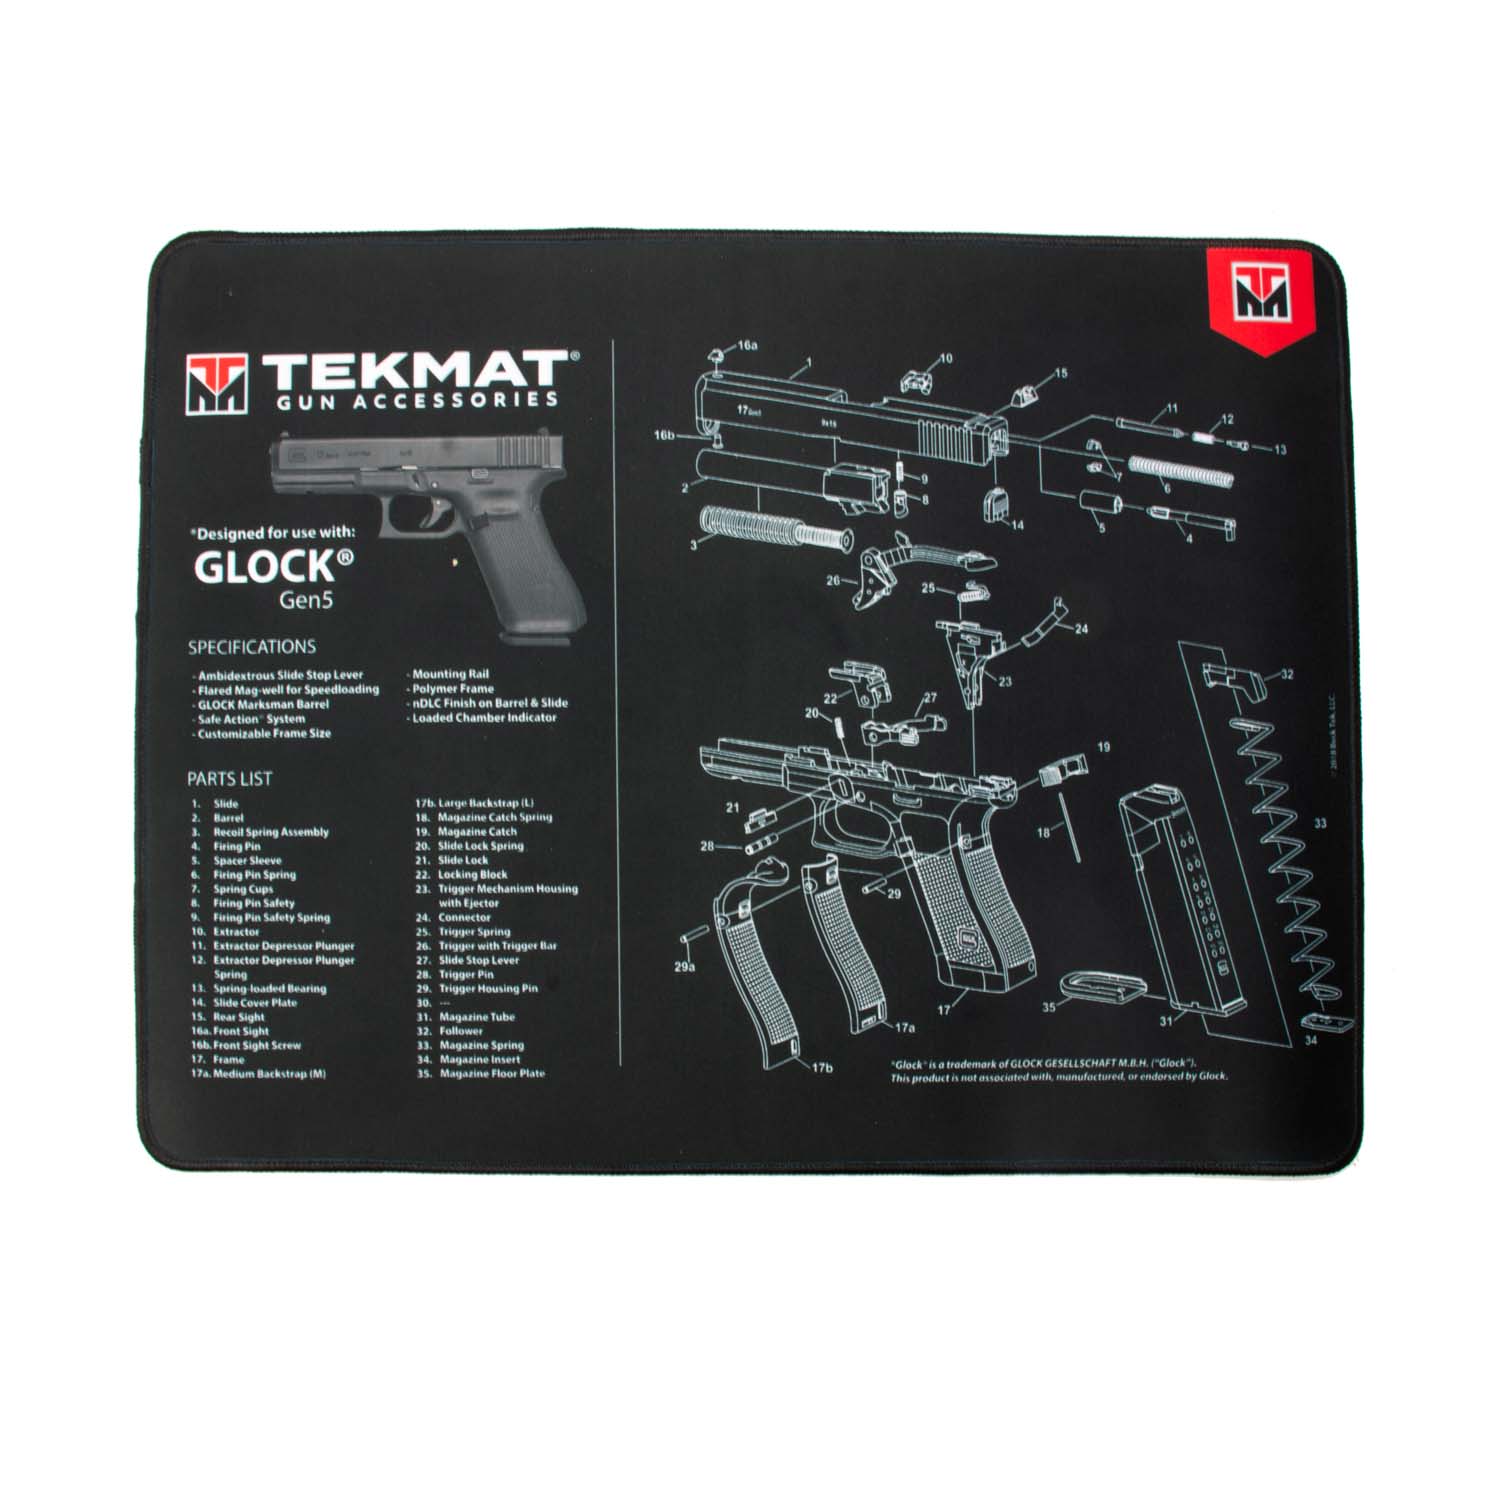 TekMat 15x20 Premium Gun Cleaning Mat for Glock Gen5, Black: MGW